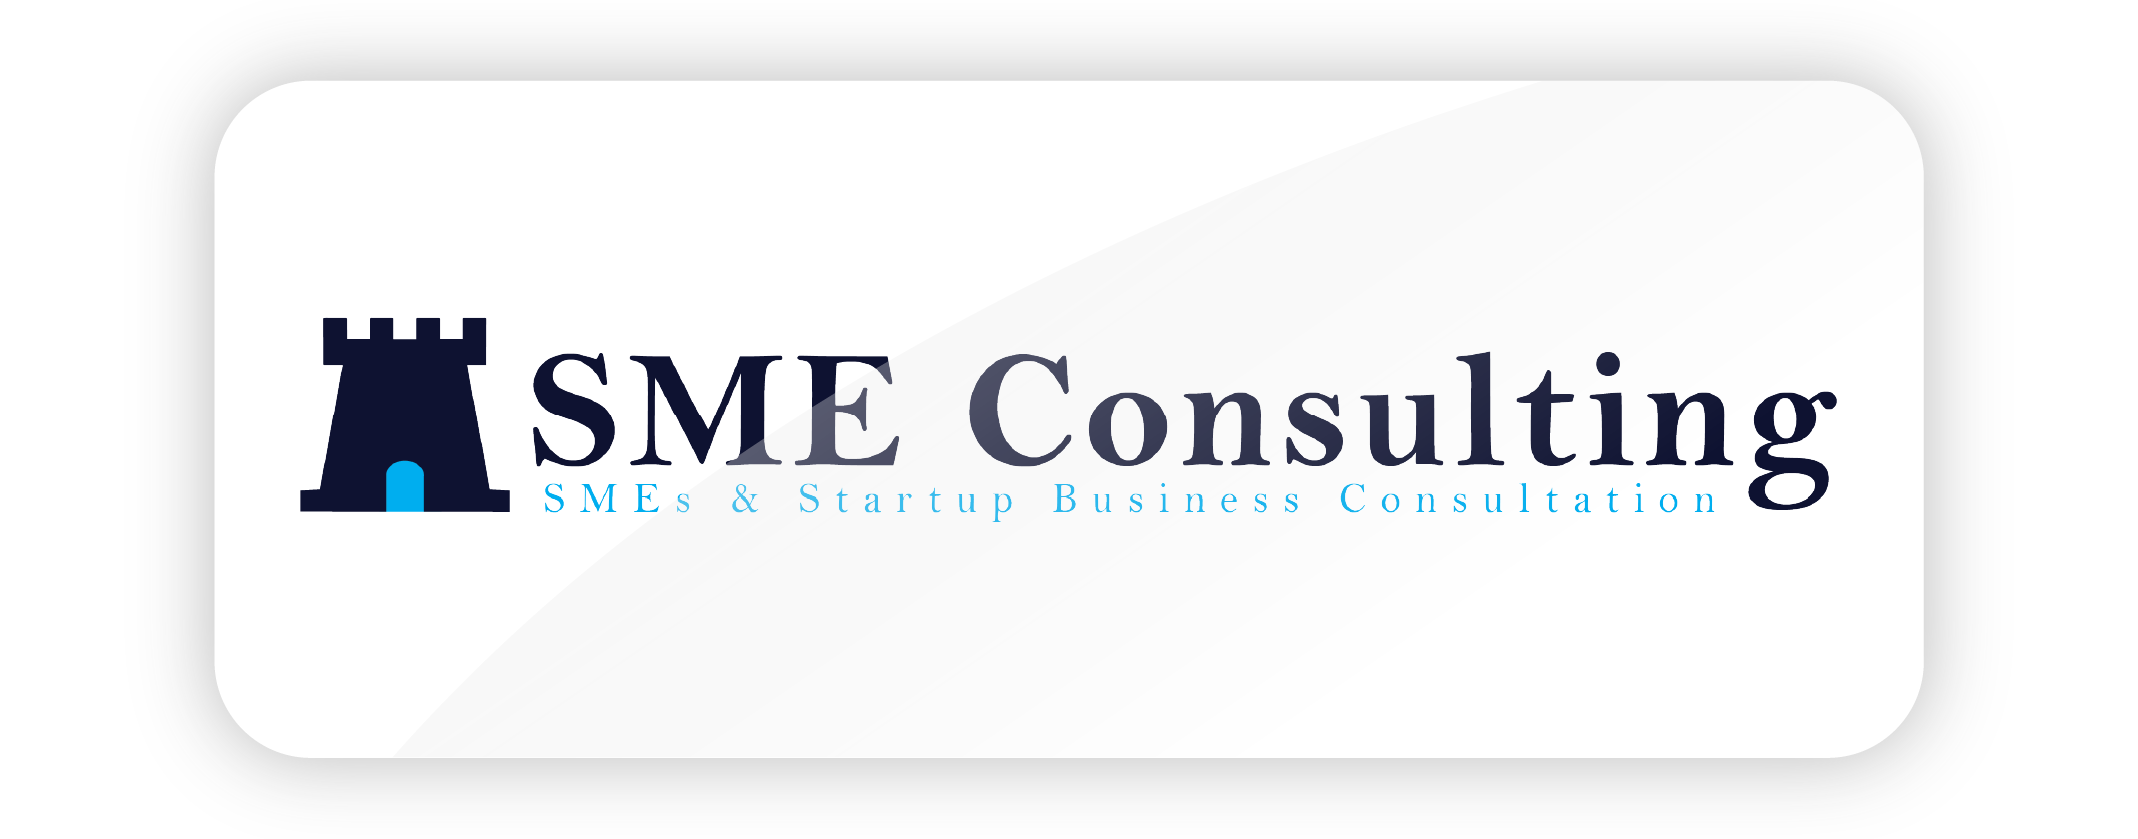 SME consulting